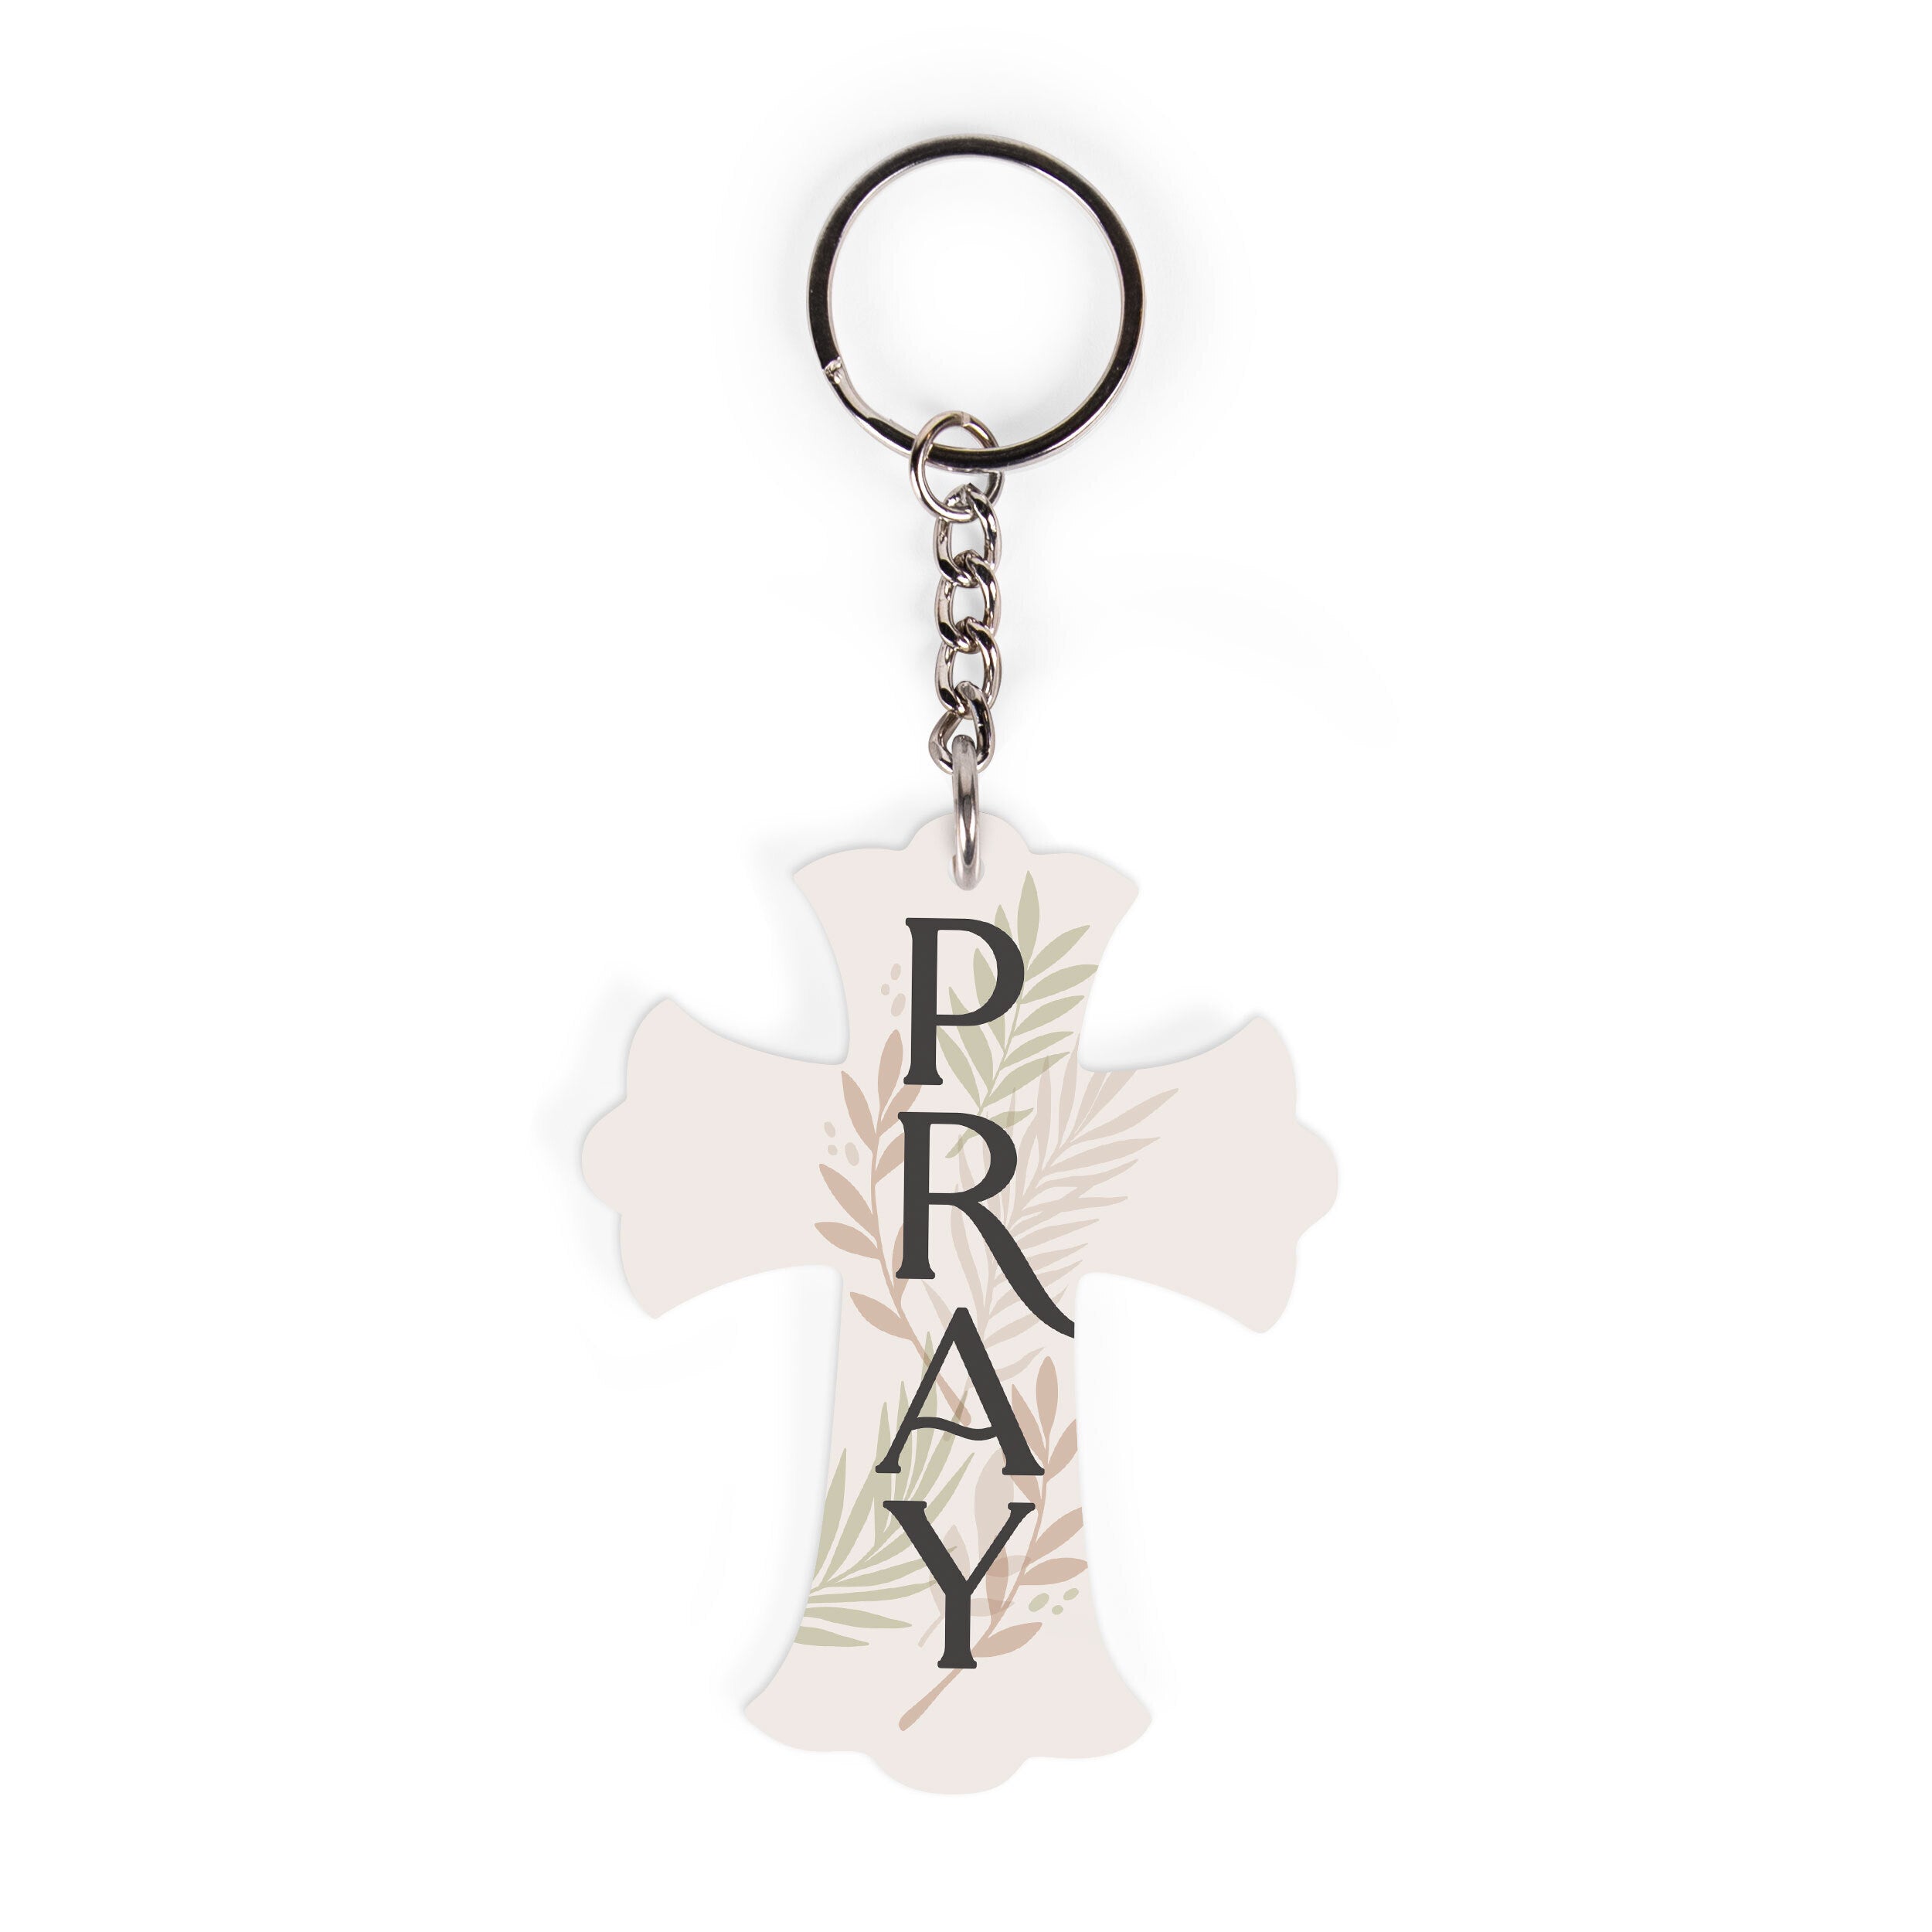 Pray Acrylic Cross Key Chain